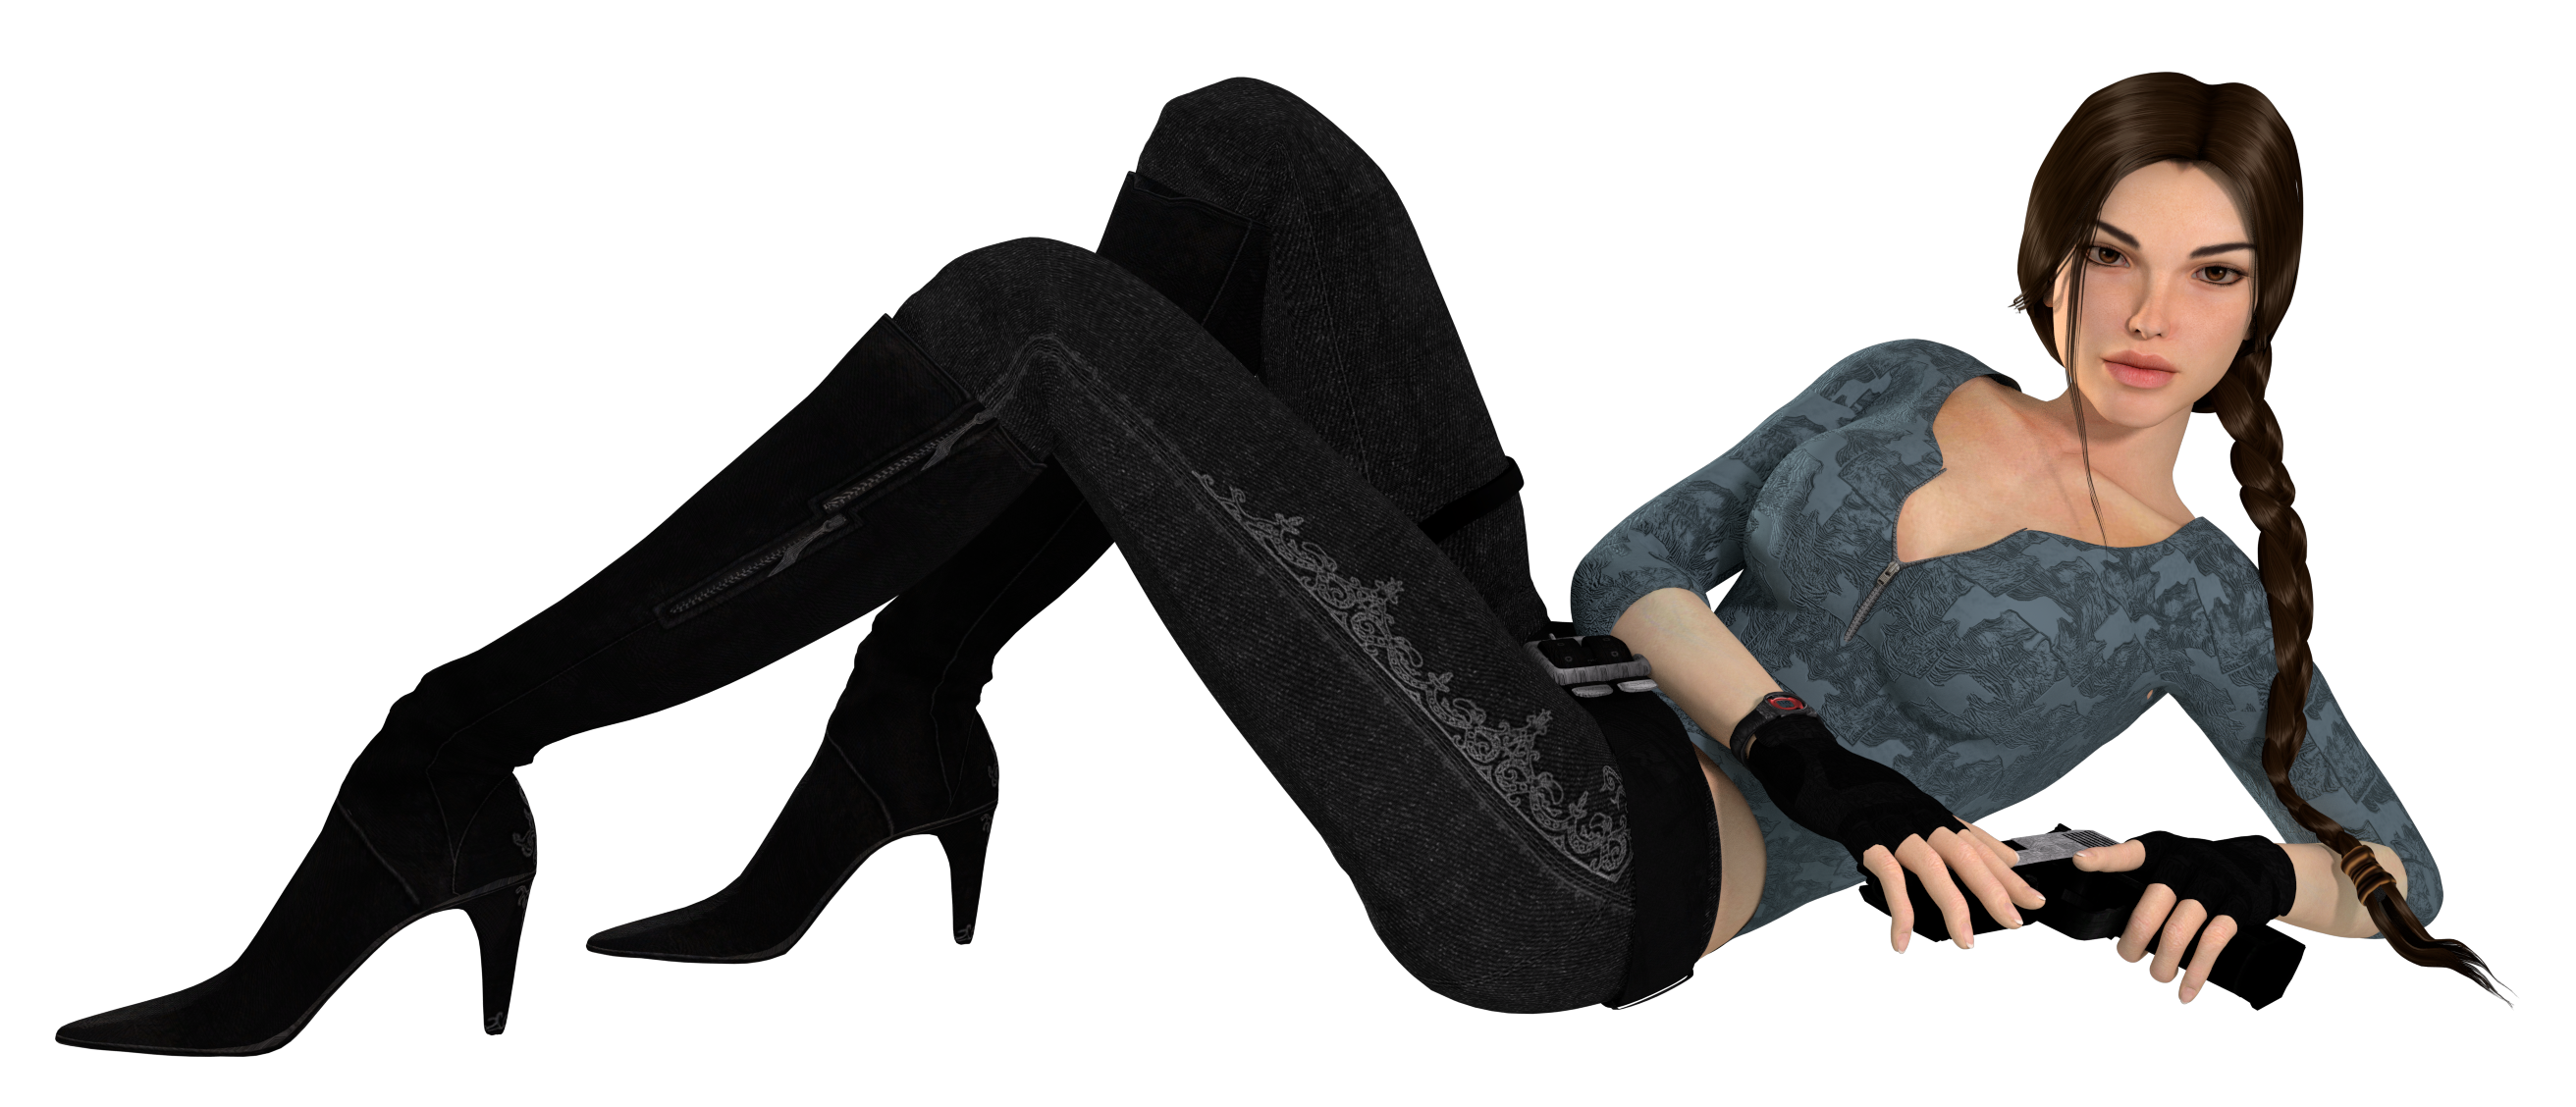 Lara Croft Transparent PNG Image